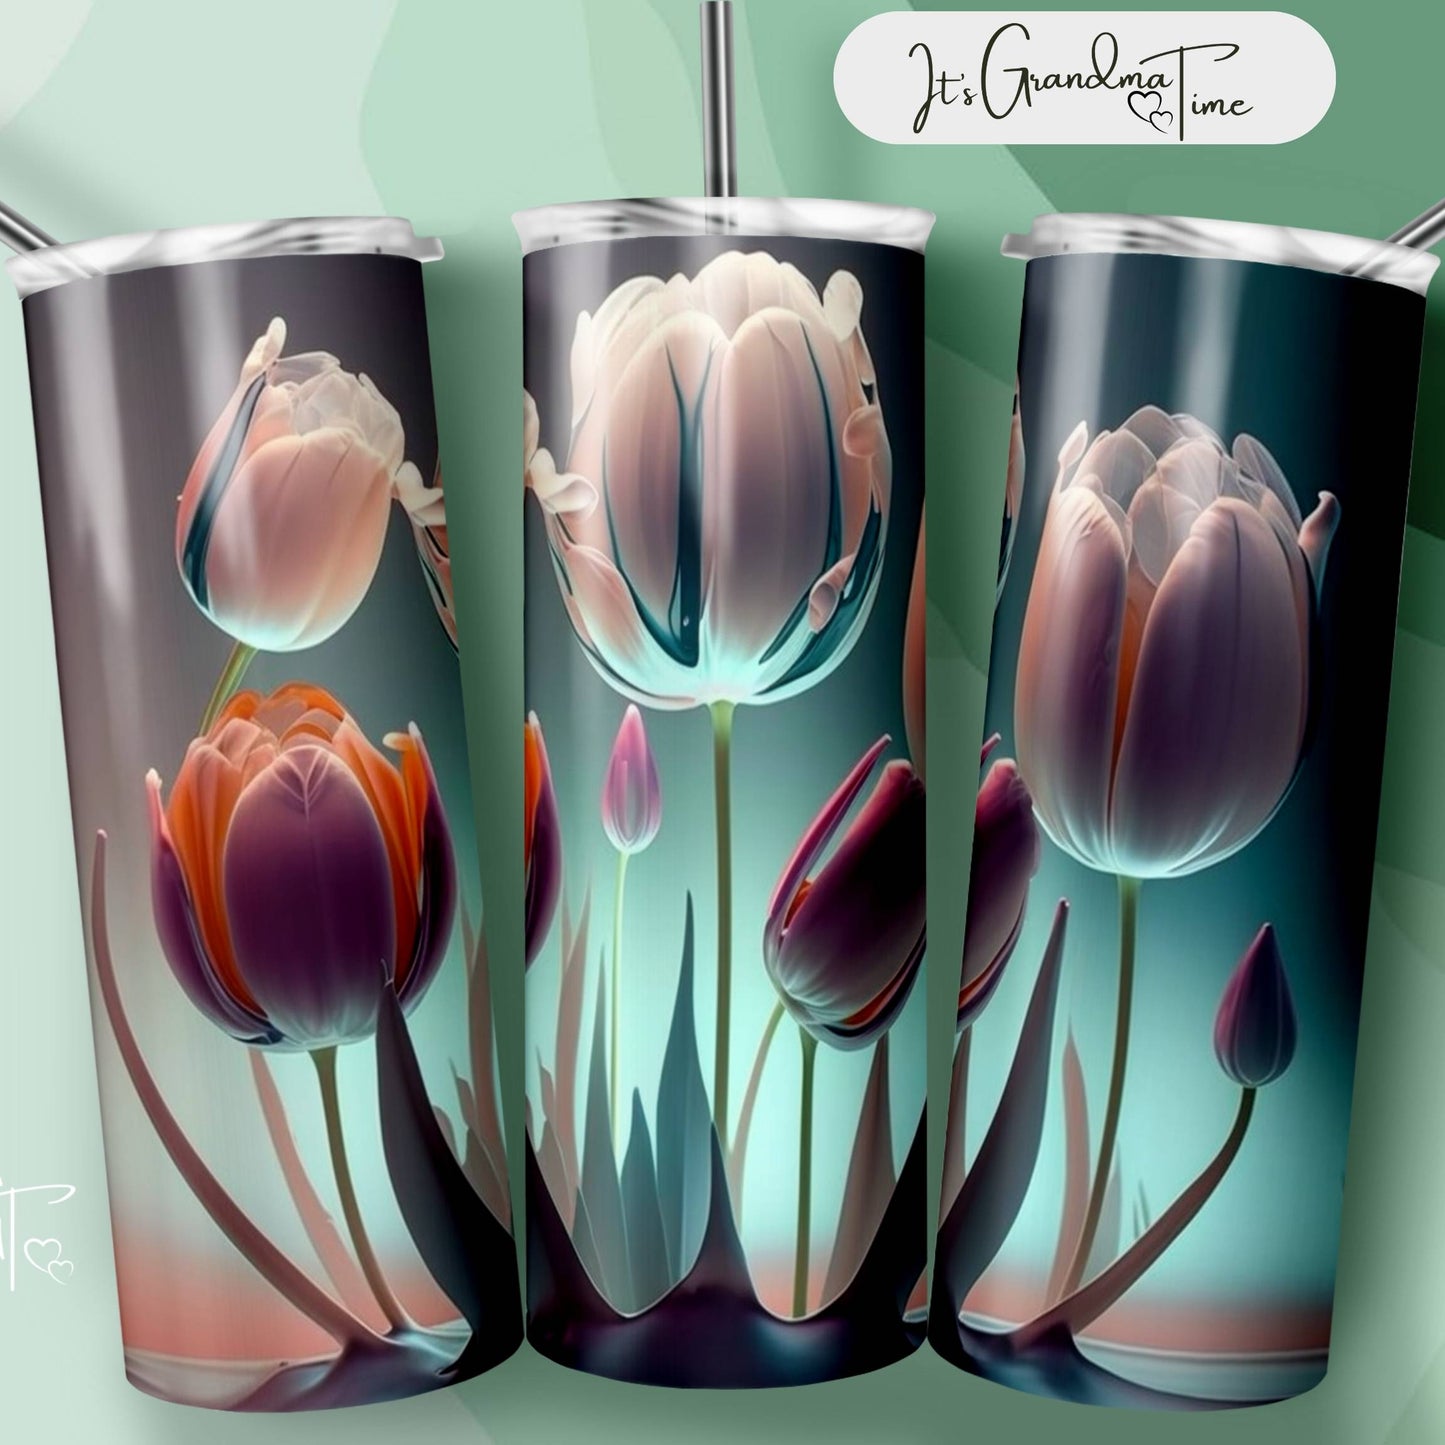 SUB1790 3D Ethereal Tulip Flower Tumbler Sublimation Transfer